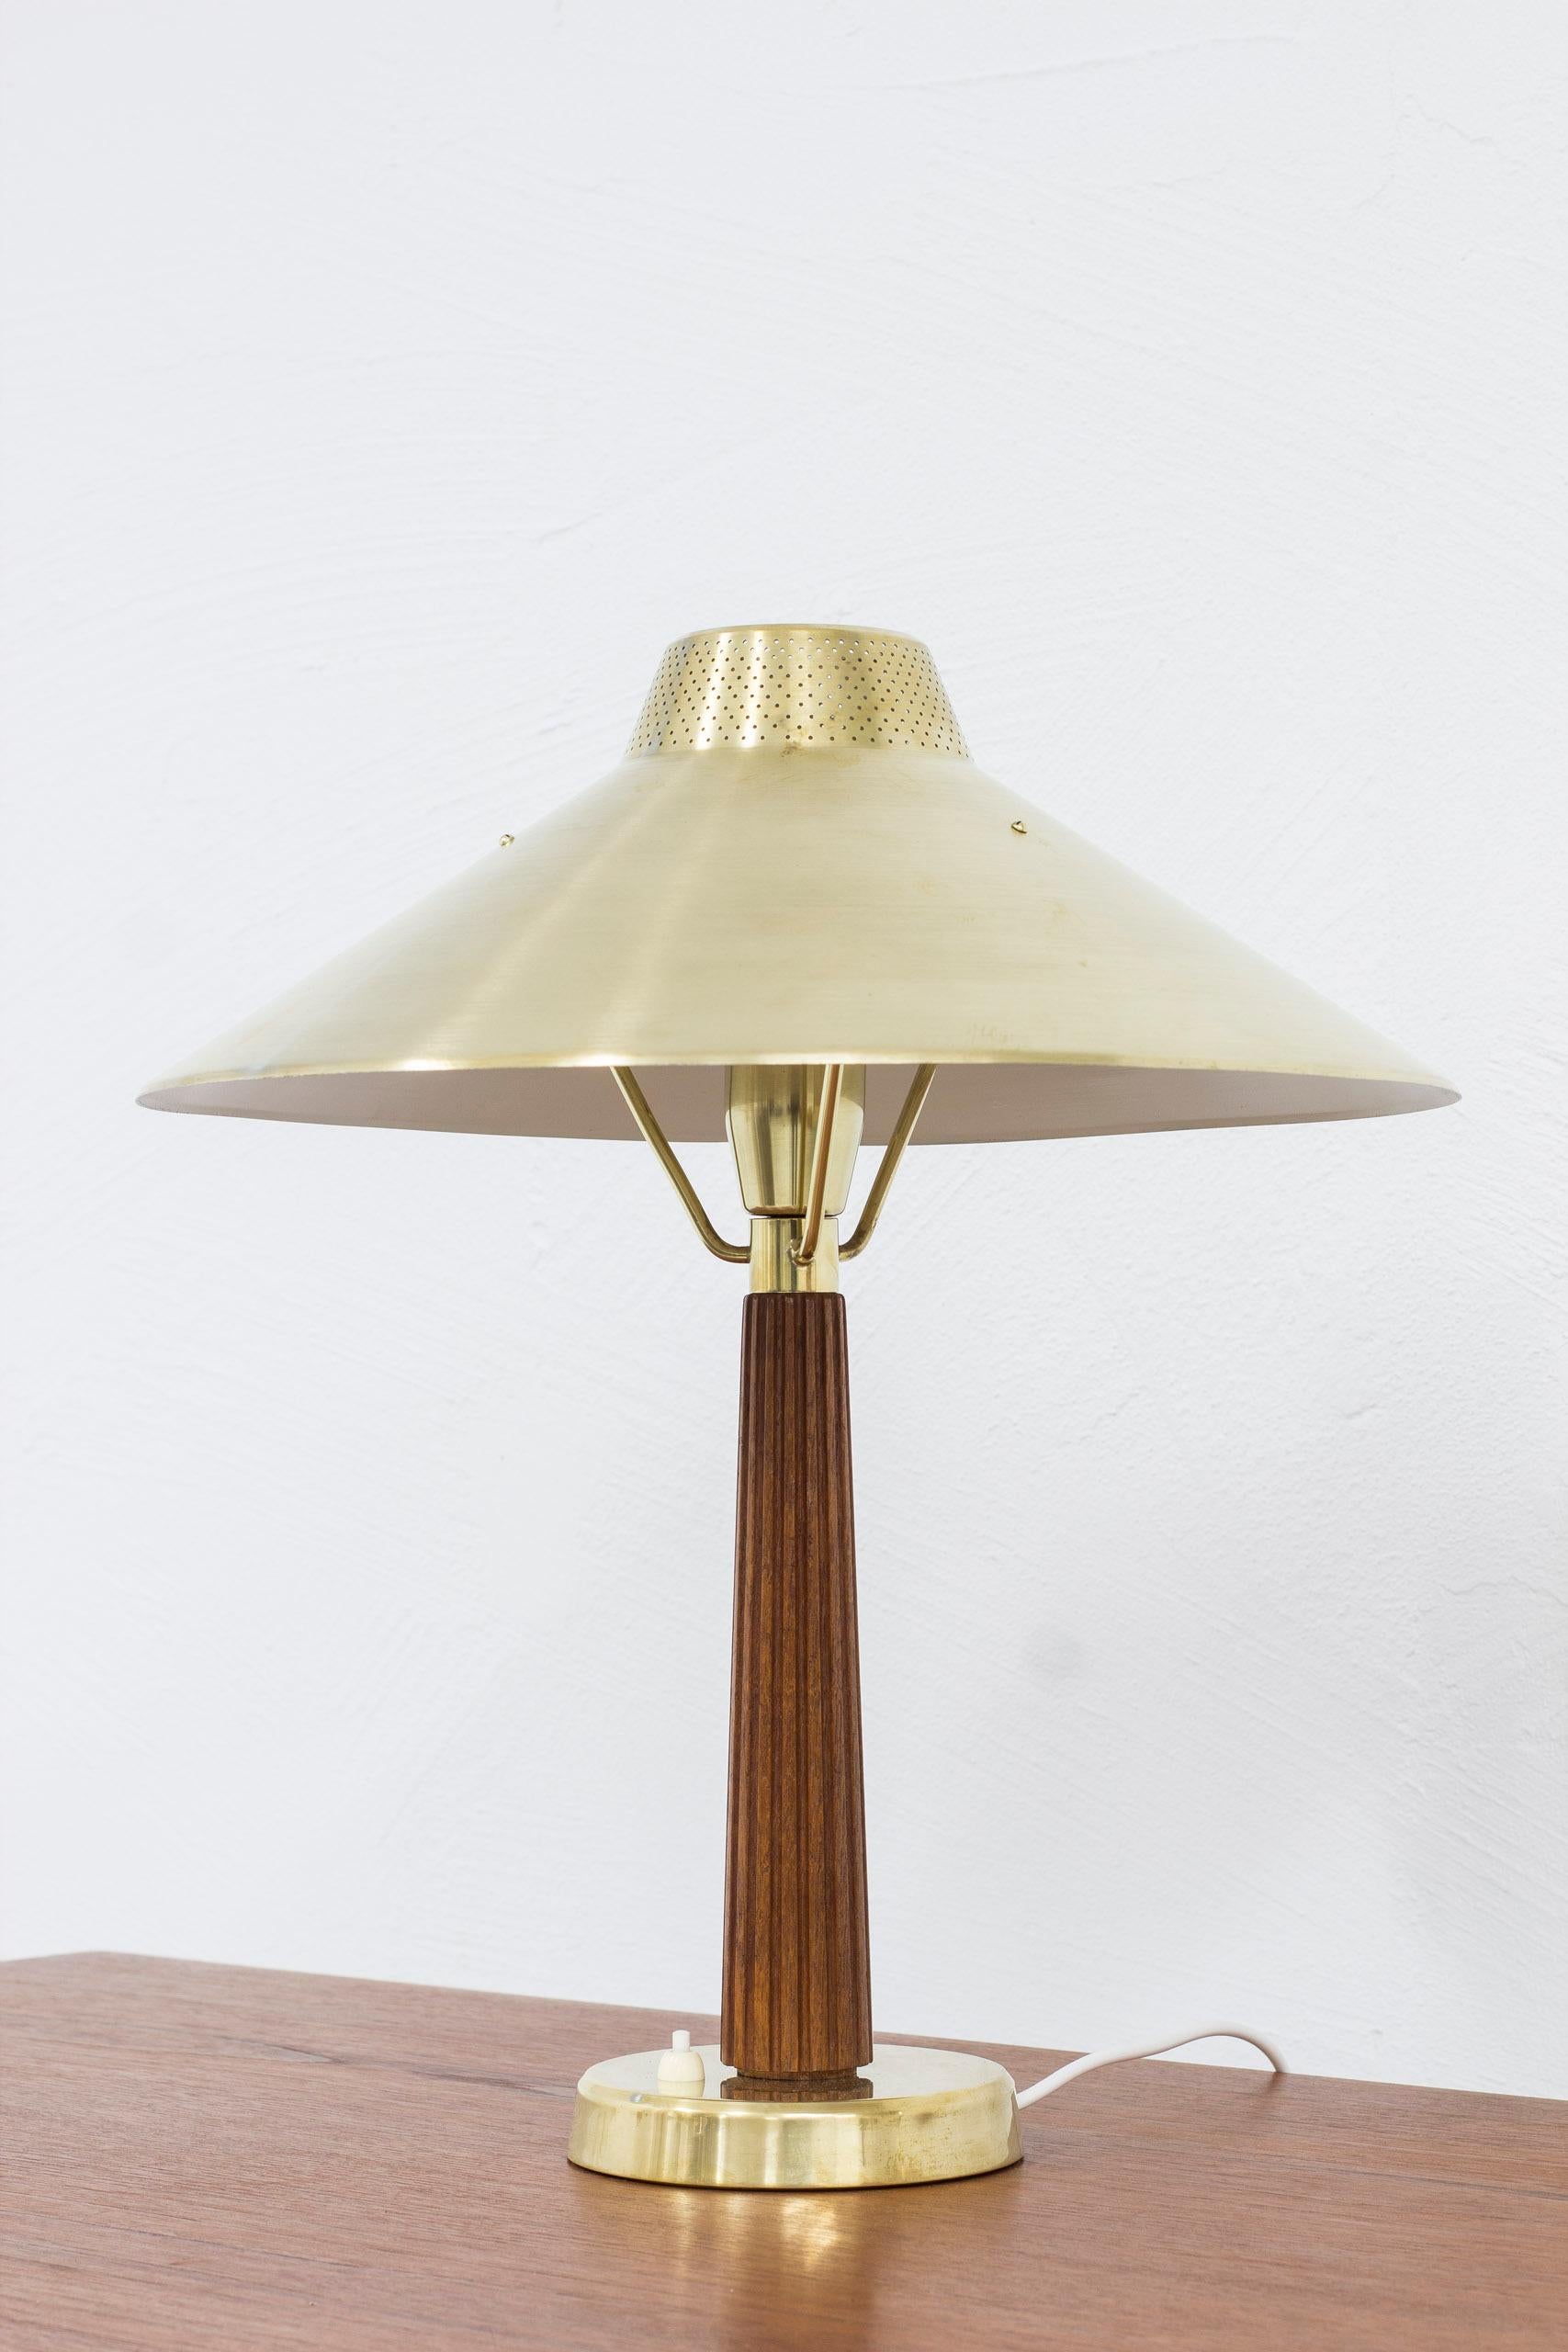 Scandinavian Modern Brass and Teak Table Lamp 716 by Hans Bergström for Ateljé Lyktan, 1950s